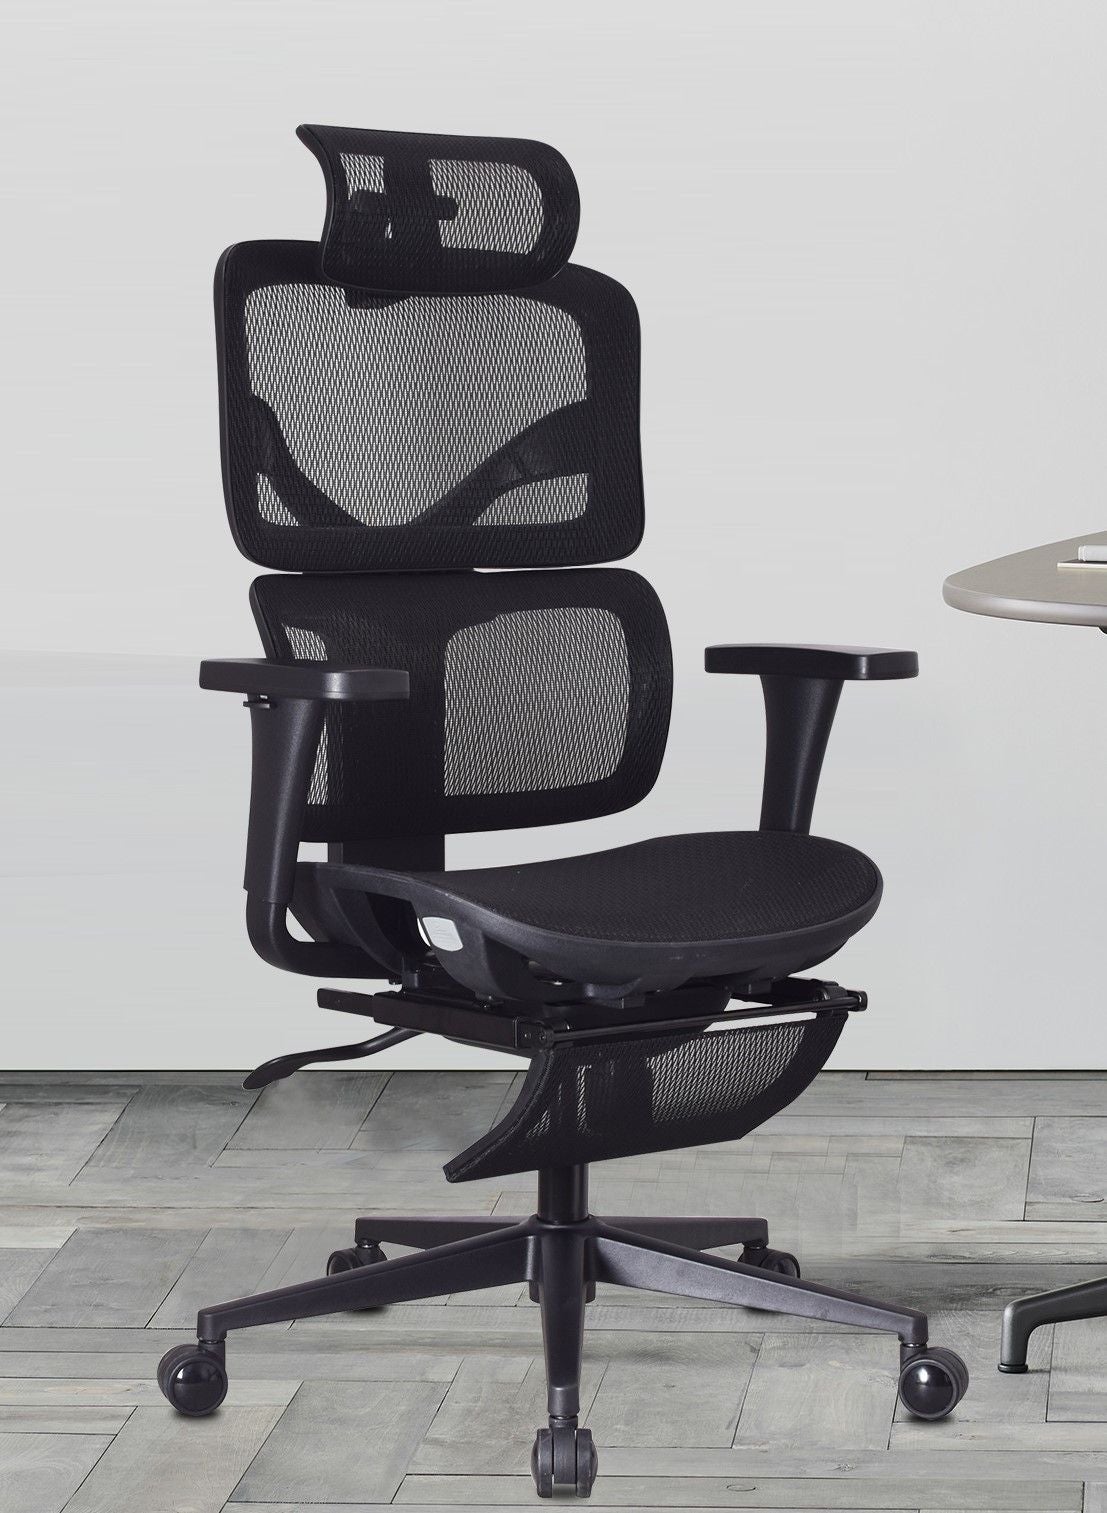 Ergonomic Executive High Mesh Back Office Chair Headrest Footrest Joyrest